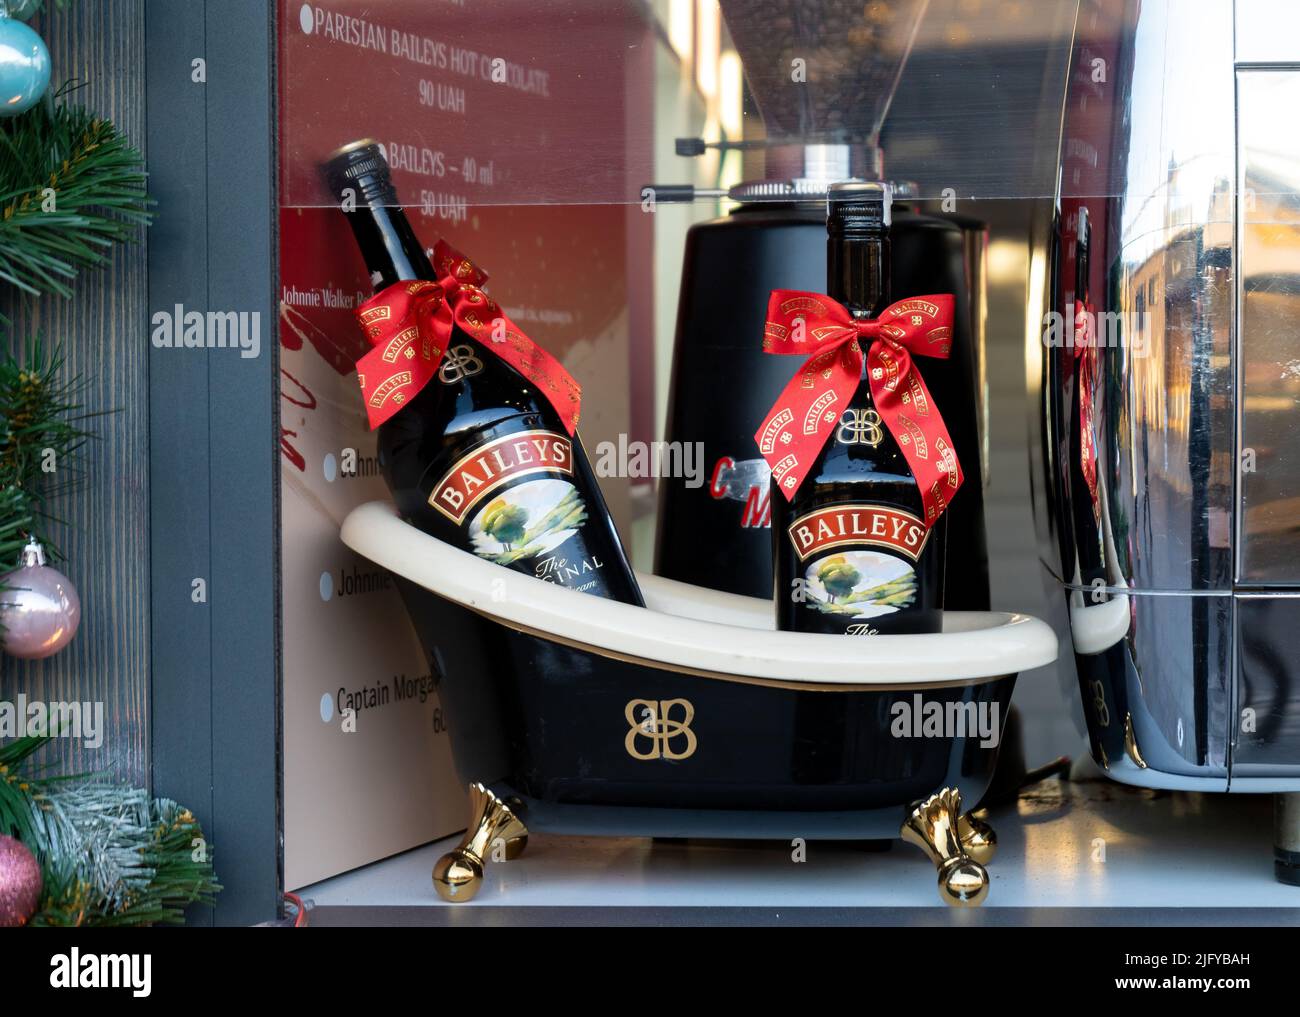 Two Baileys bottles. Alcoholic liquor for Christmas and holidays. Street fair. Ukraine, Kyiv - December 1, 2021 Stock Photo